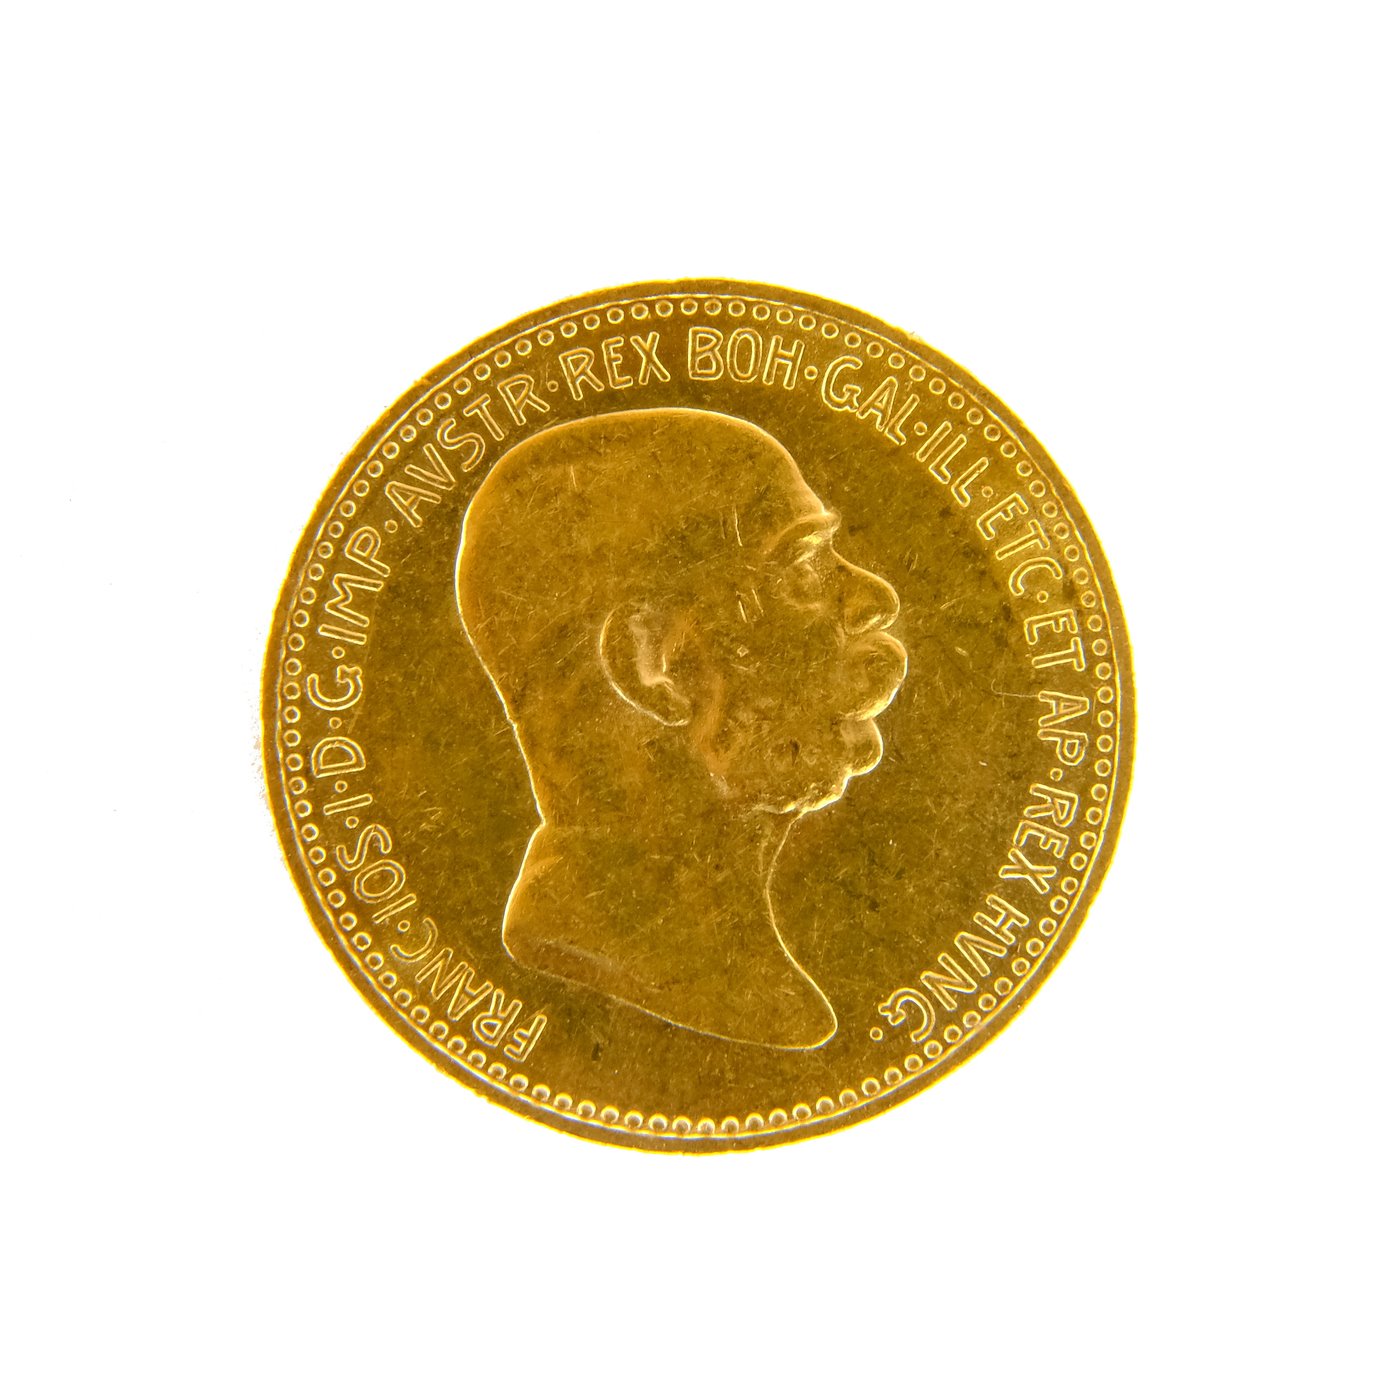 .. - Rakousko Uhersko zlatá 10 Koruna 1909 Marschall rakouská,  zlato 900/1000, hrubá hmotnost 3,387g